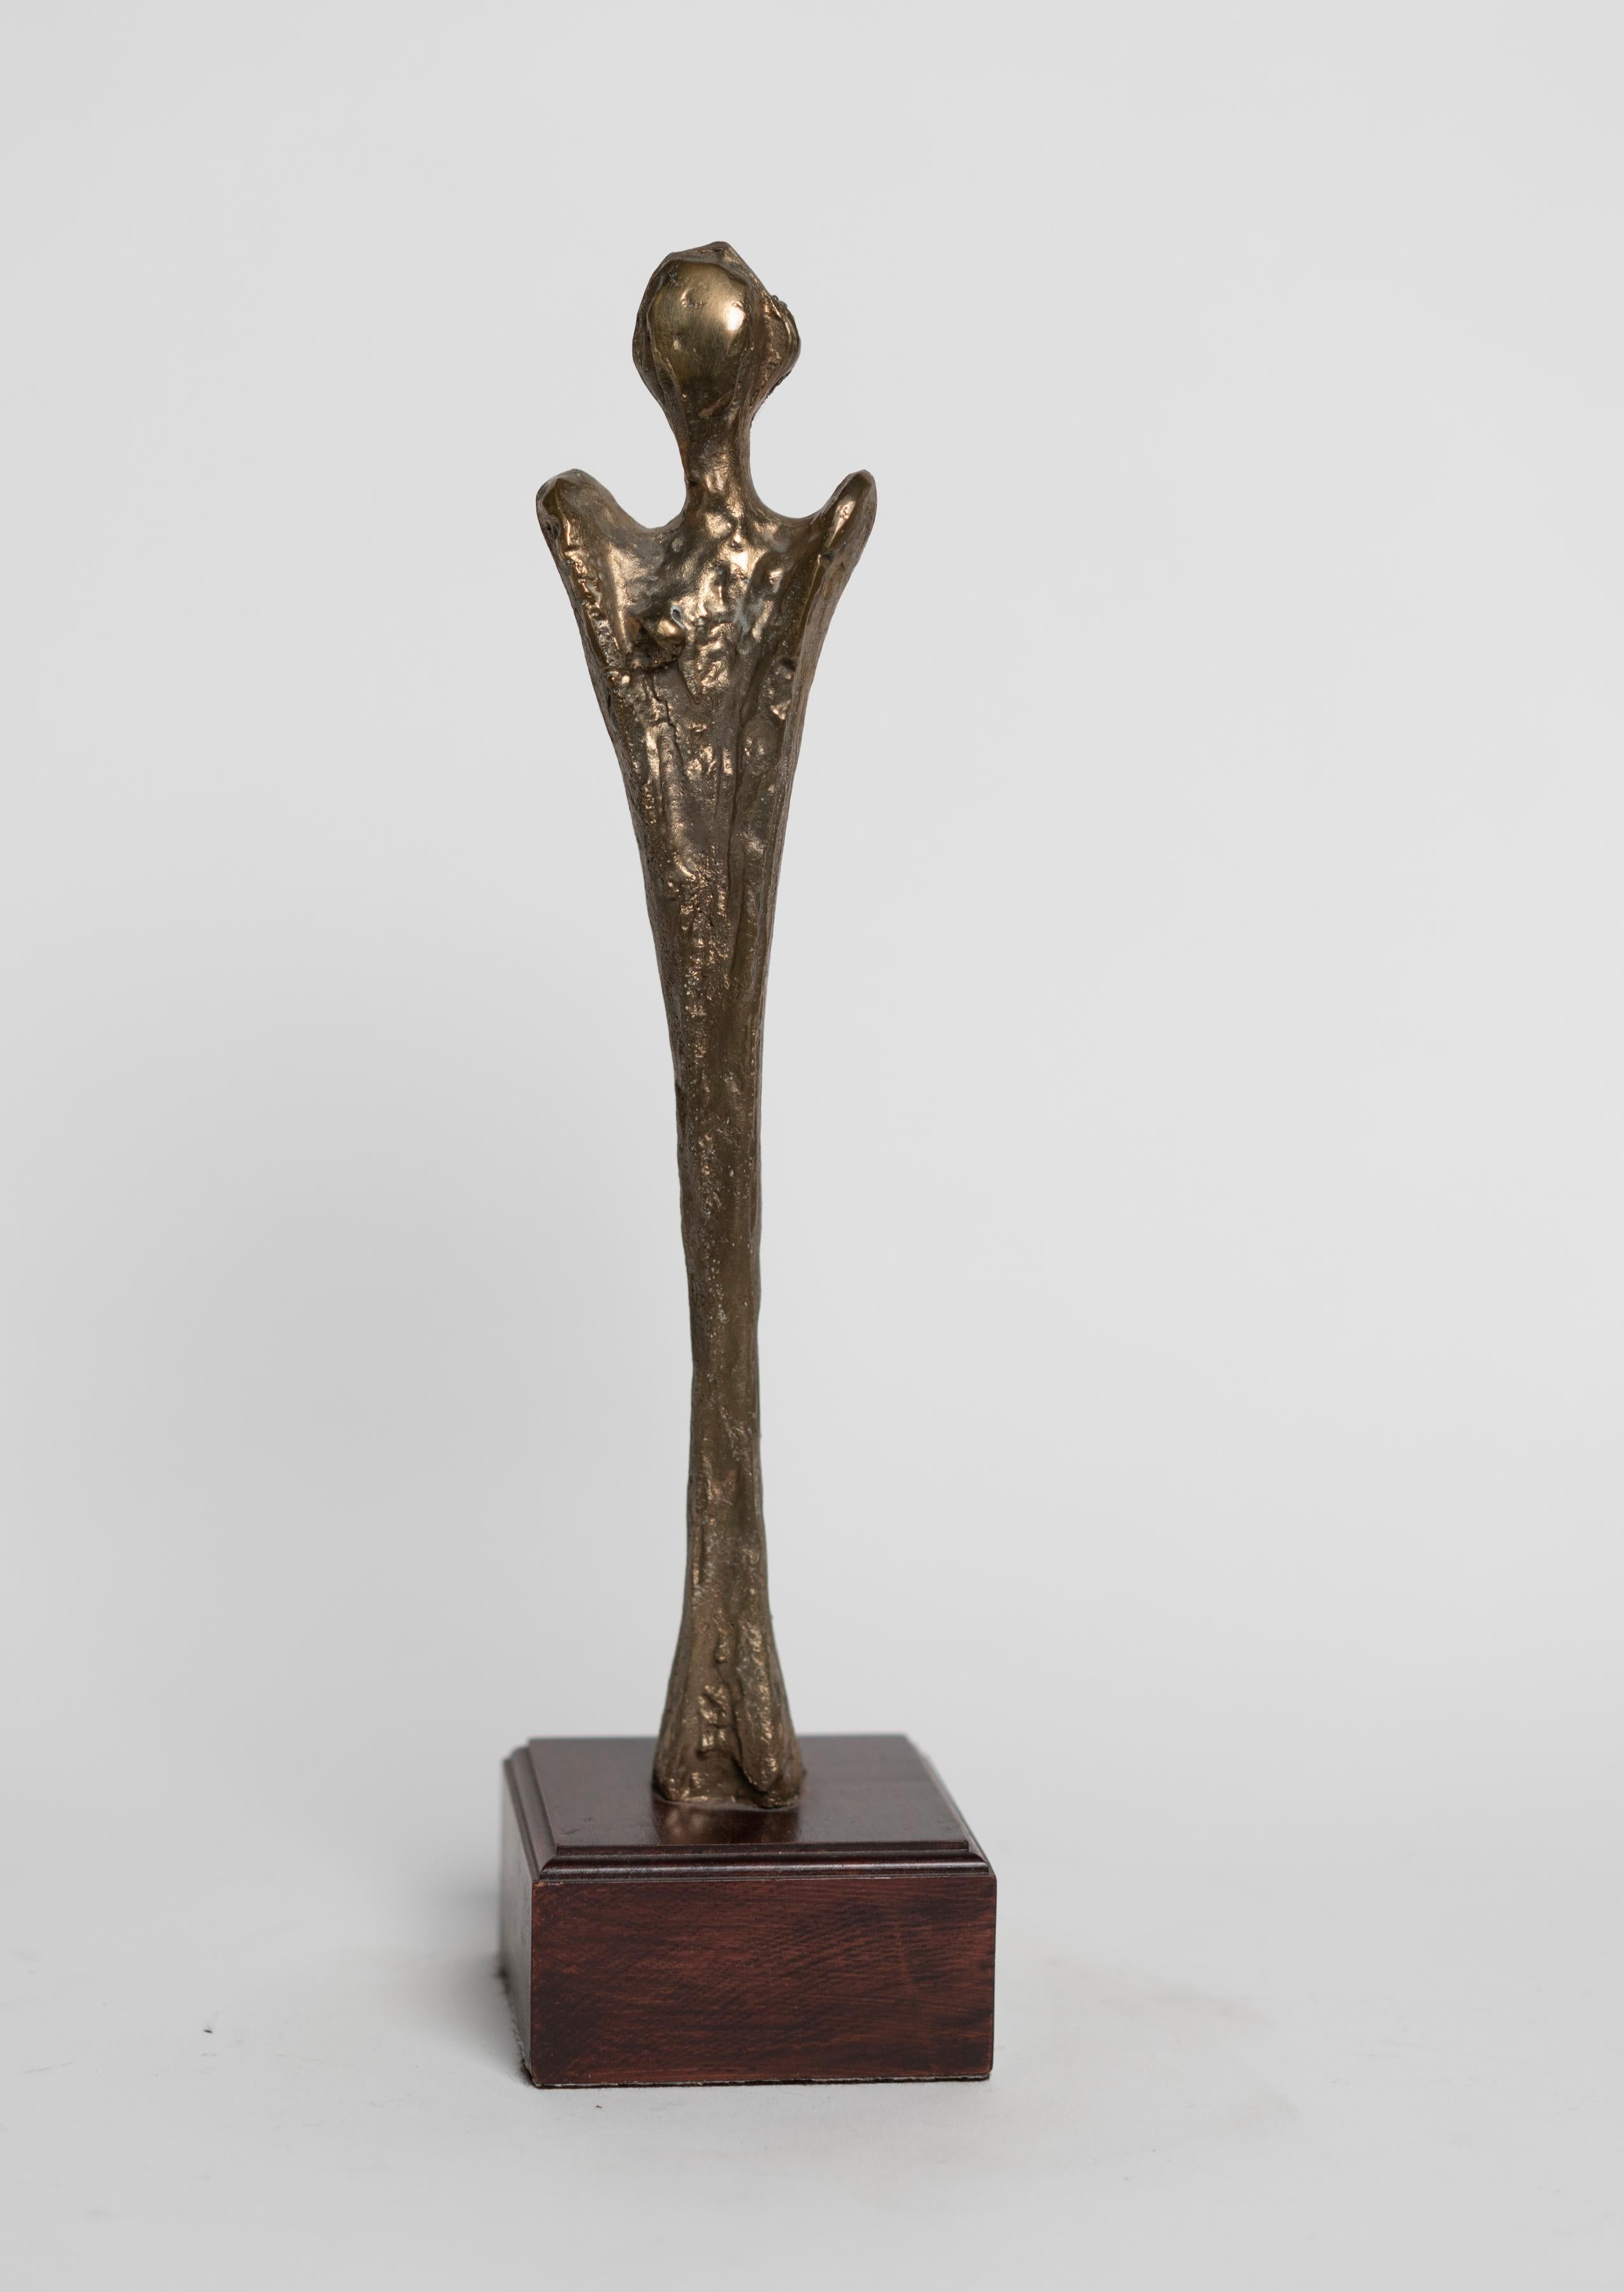 Sculpted Patinated bronze figure by Antonio Grediagia Kieff Signed engraved: Kieff e/a for épreuve d'artiste artist proof.